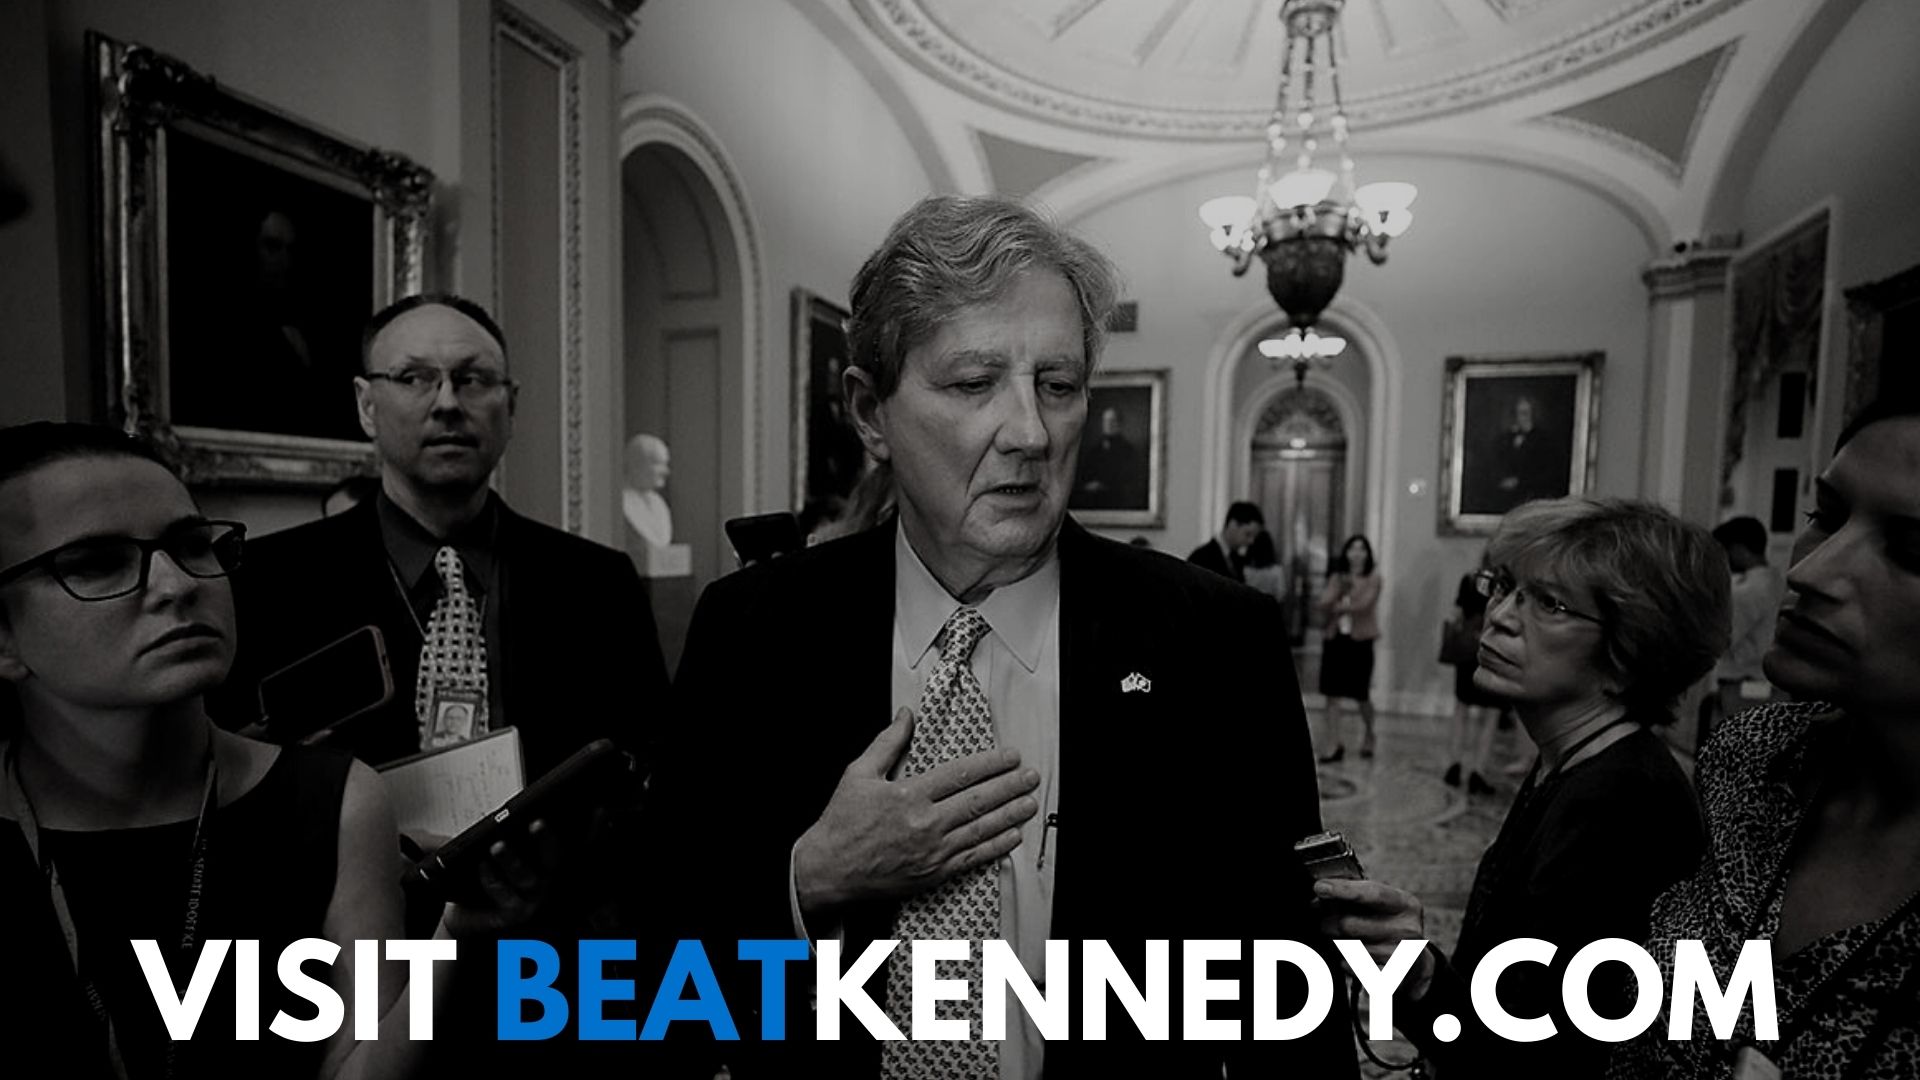 Beat Kennedy